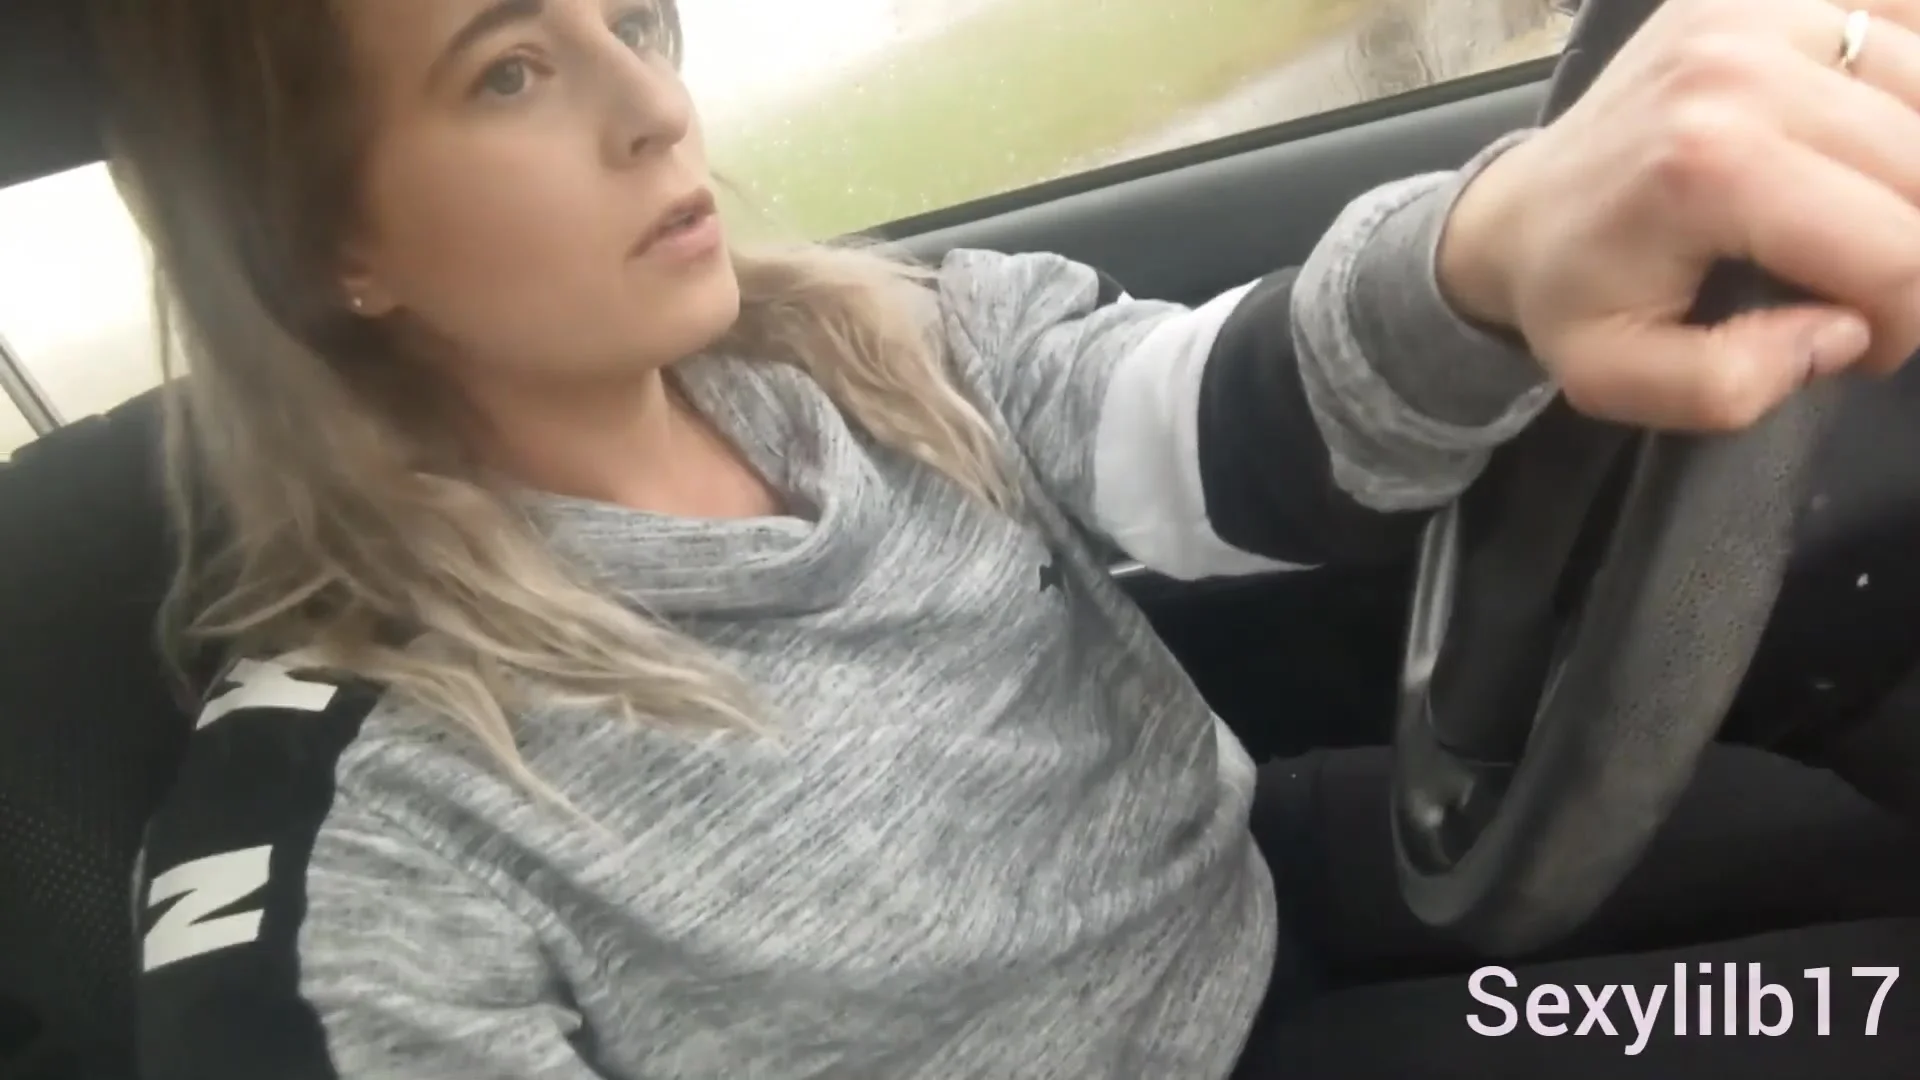 Blond Girl Masturbating Hd - Blonde chick pissing and masturbating while driving - ThisVid.com